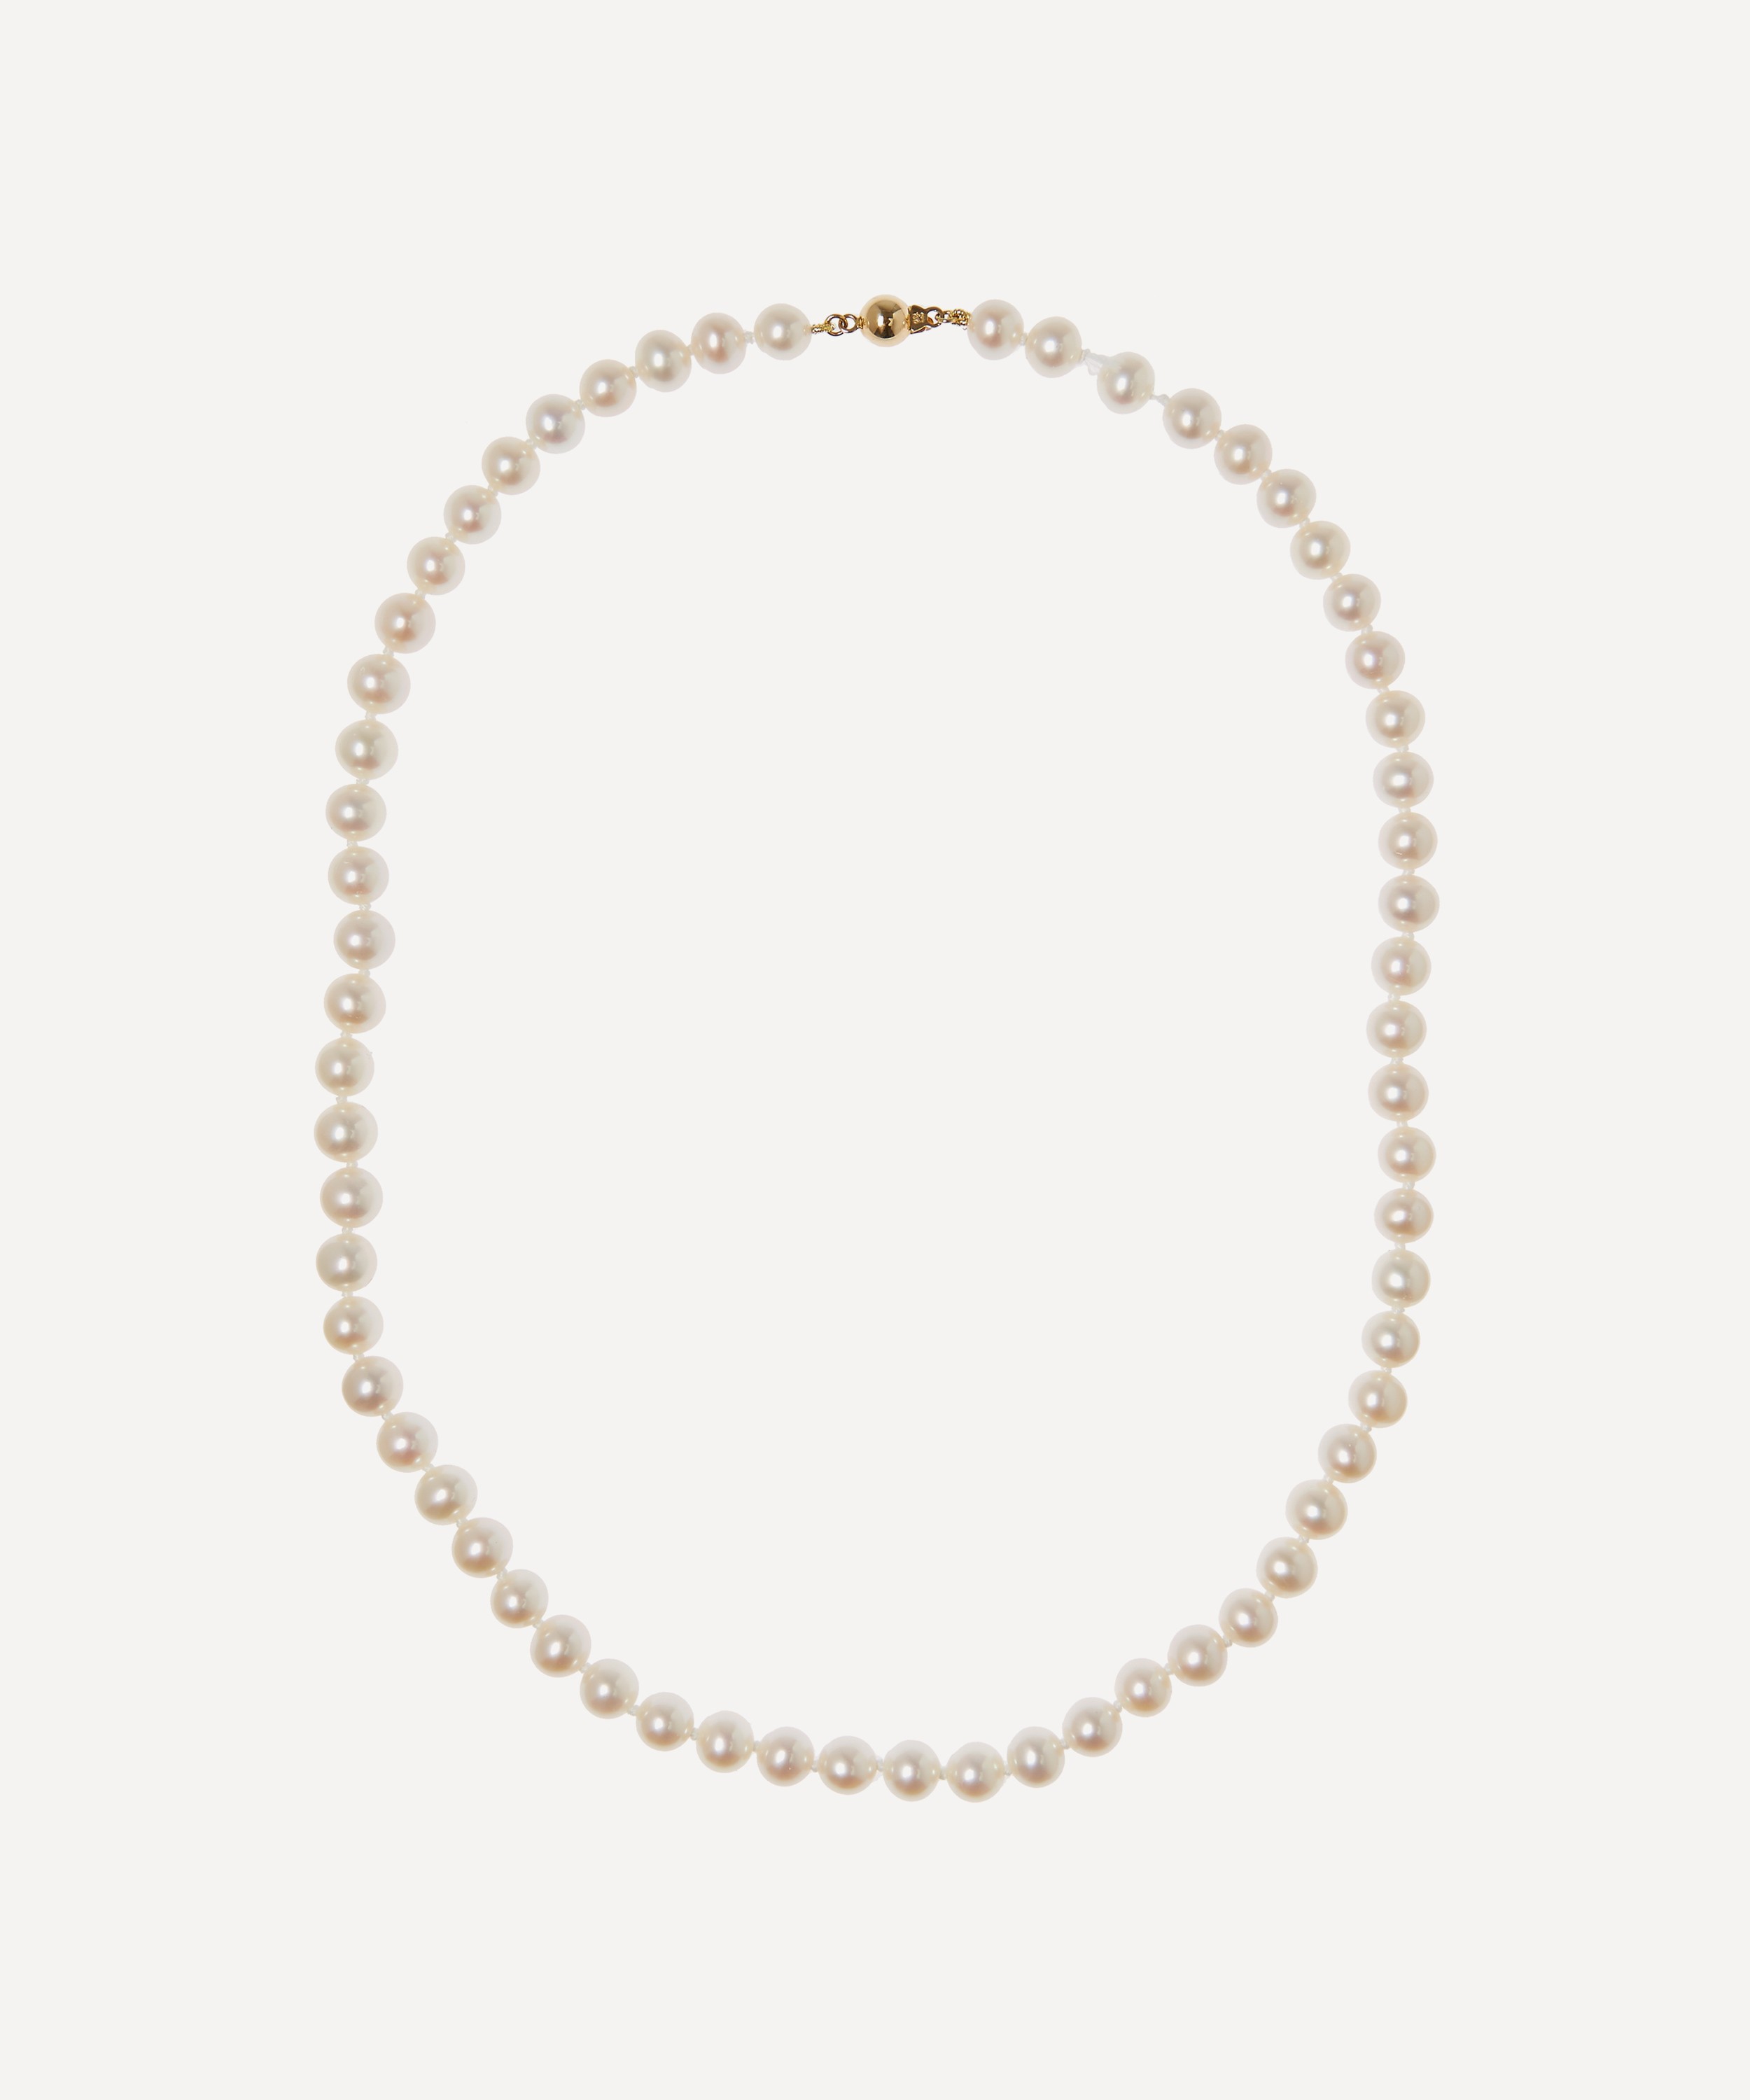 Kojis - Freshwater Pearl Necklace